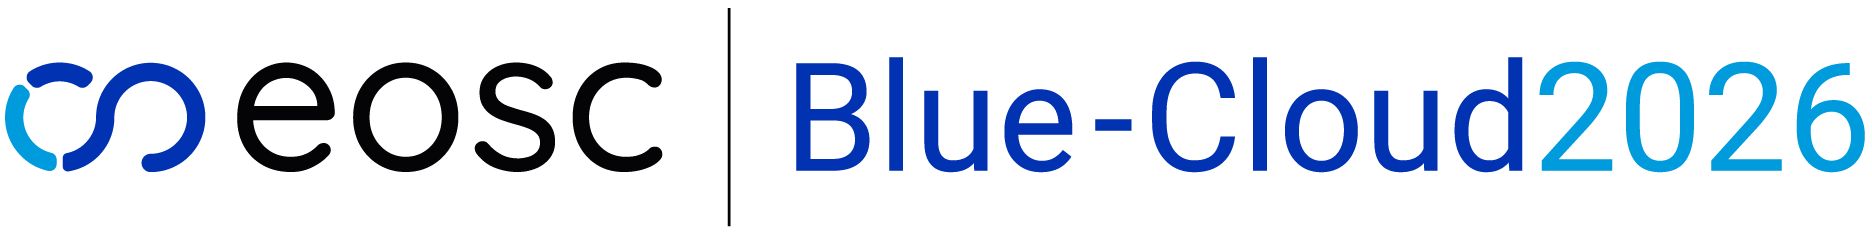 logo The Blue-Cloud2026 project